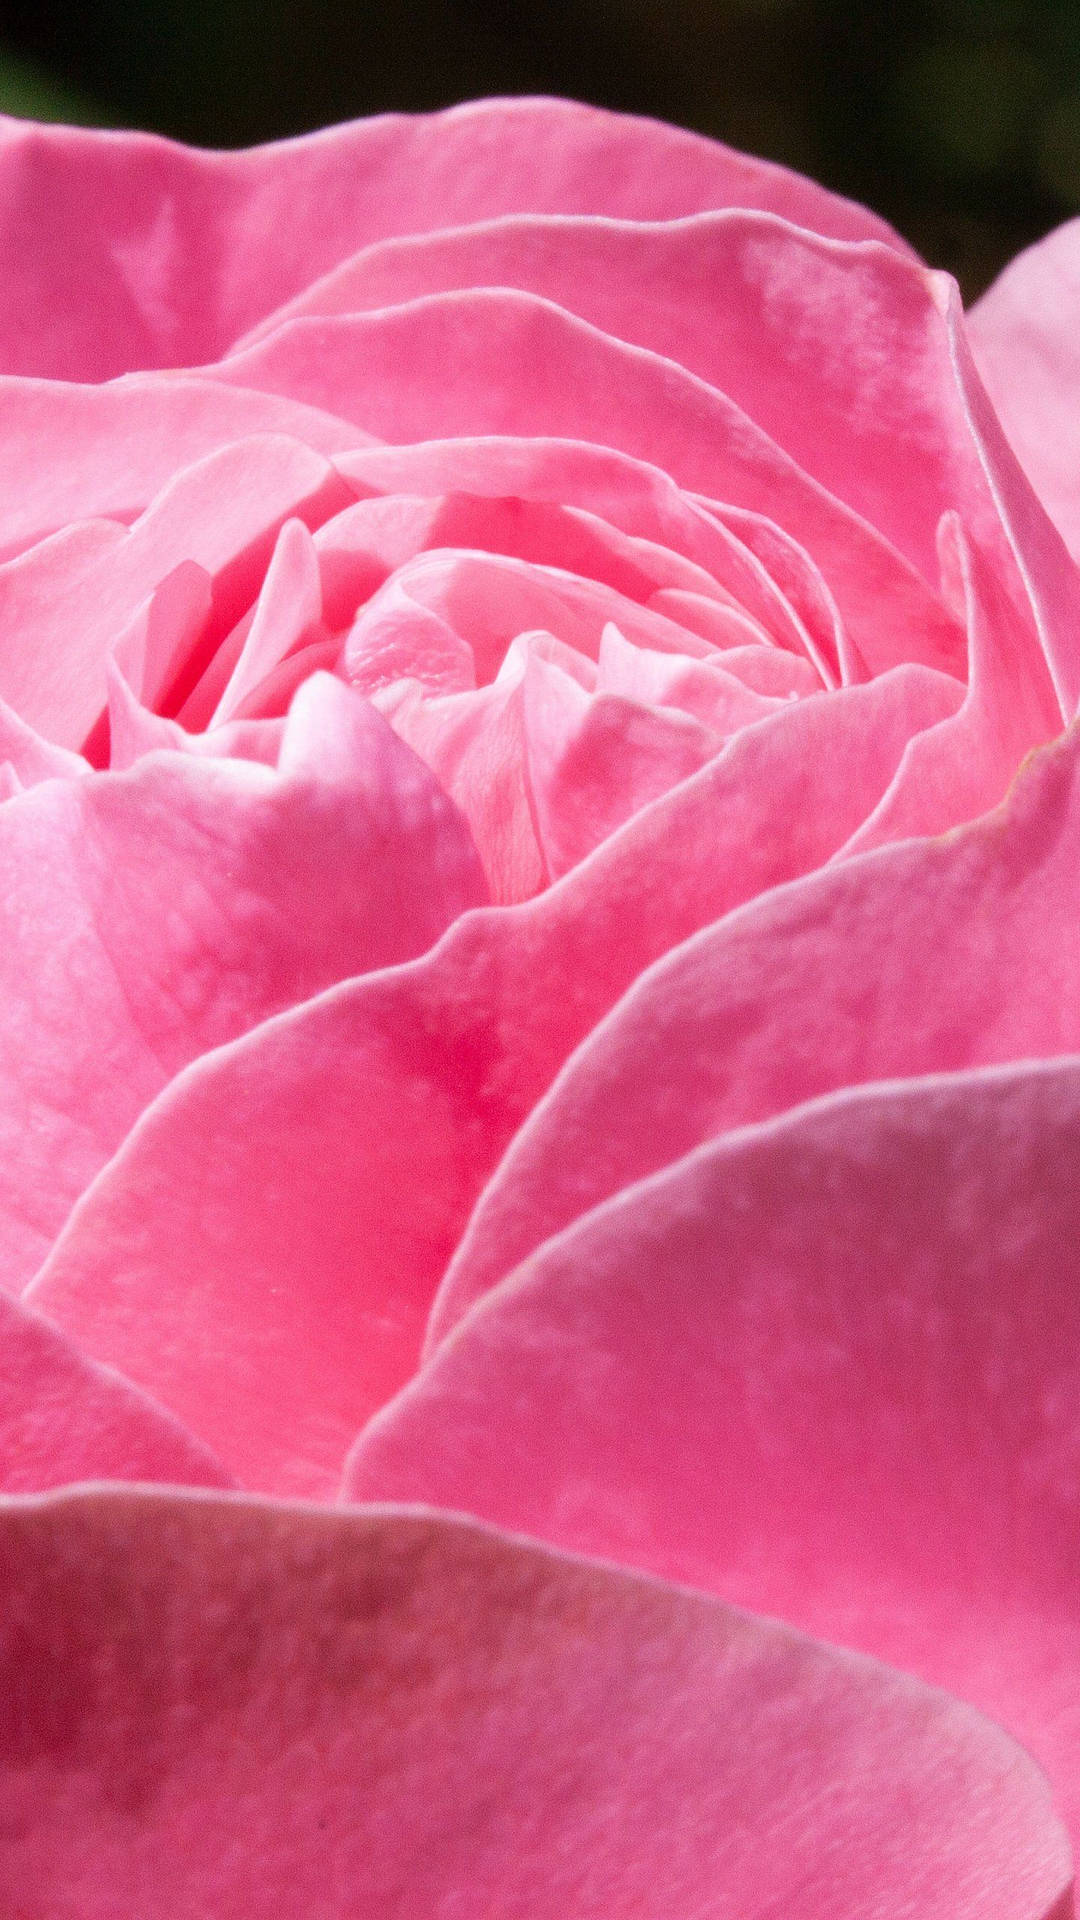 Pink Rose Iphone 1440 X 2560 Wallpaper